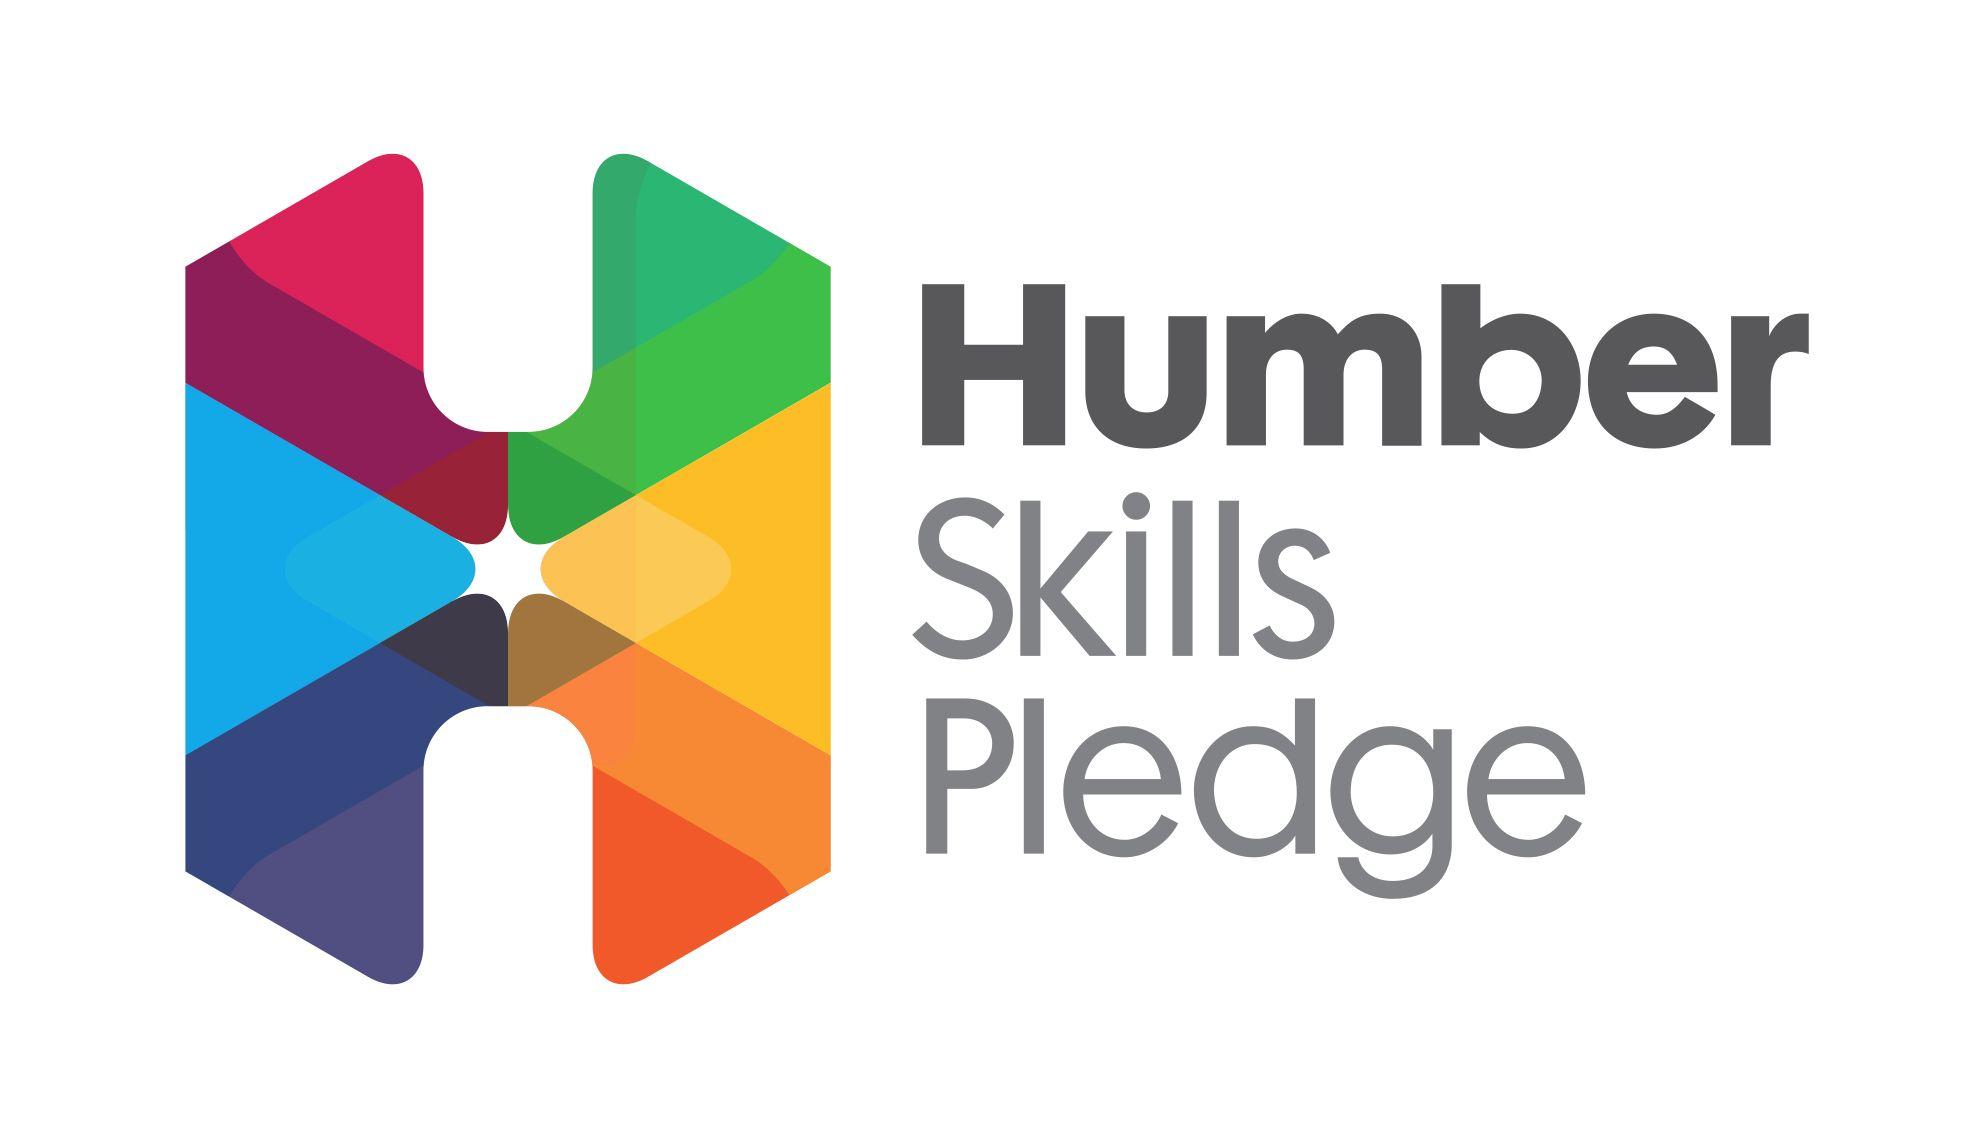 Pledge Logo - Skills Pledge Humber LEP